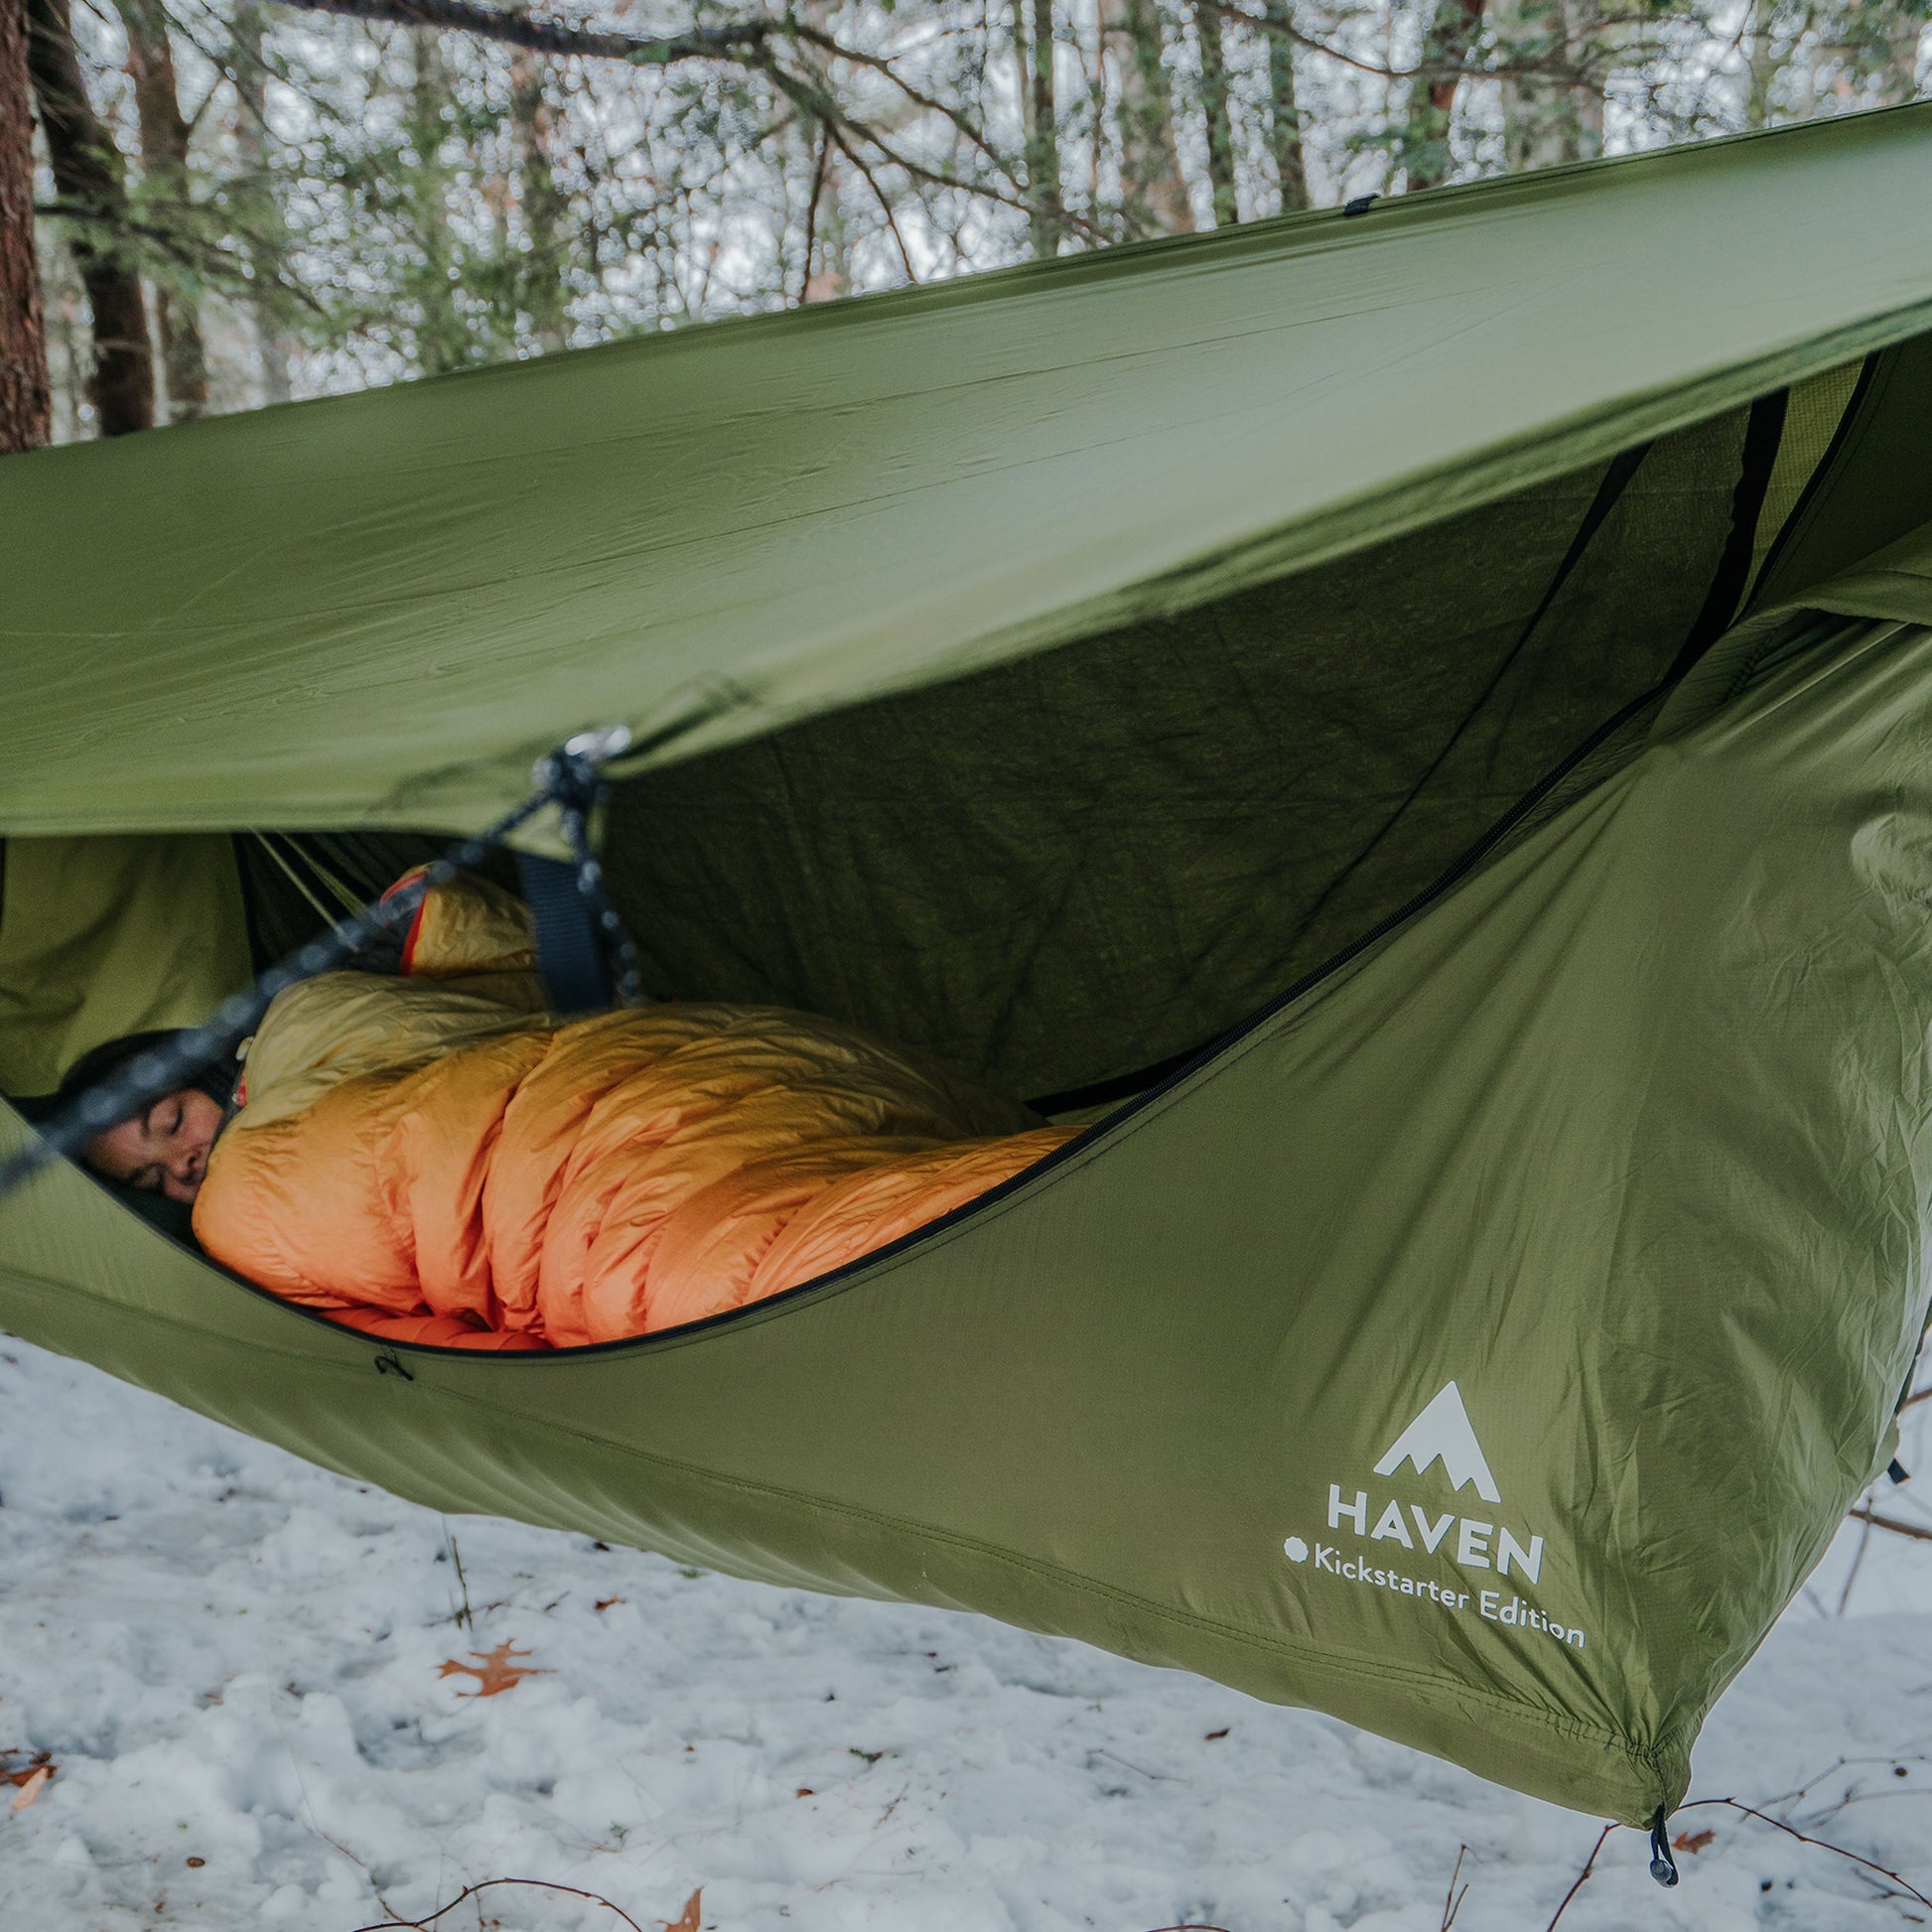 Woman sleeping in a hammock tent outdoors in winter